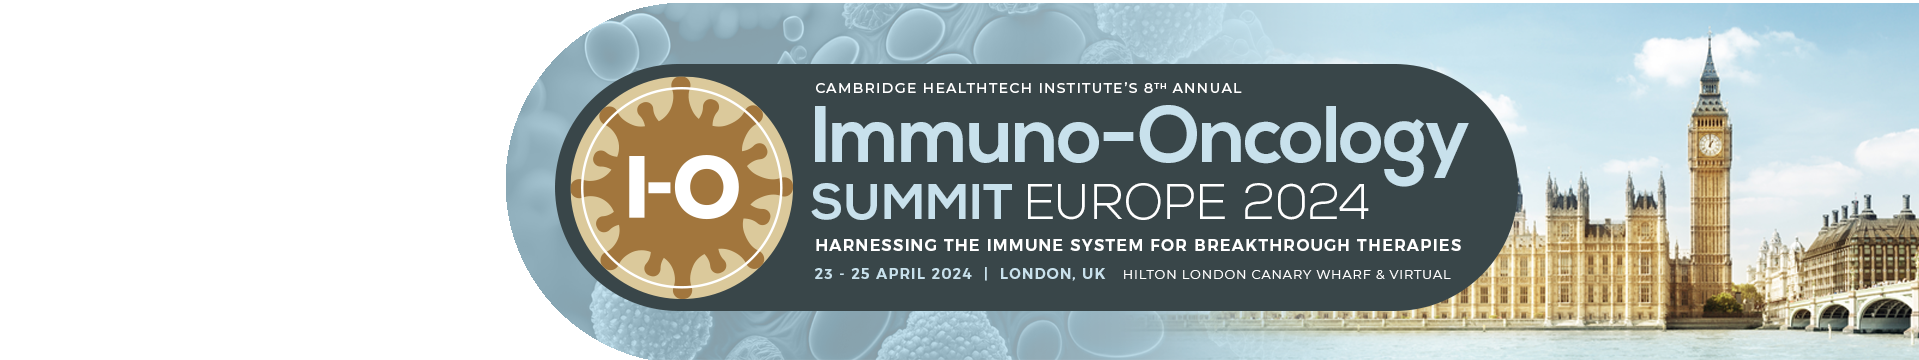 Immuno-Oncology Summit Europe 2024